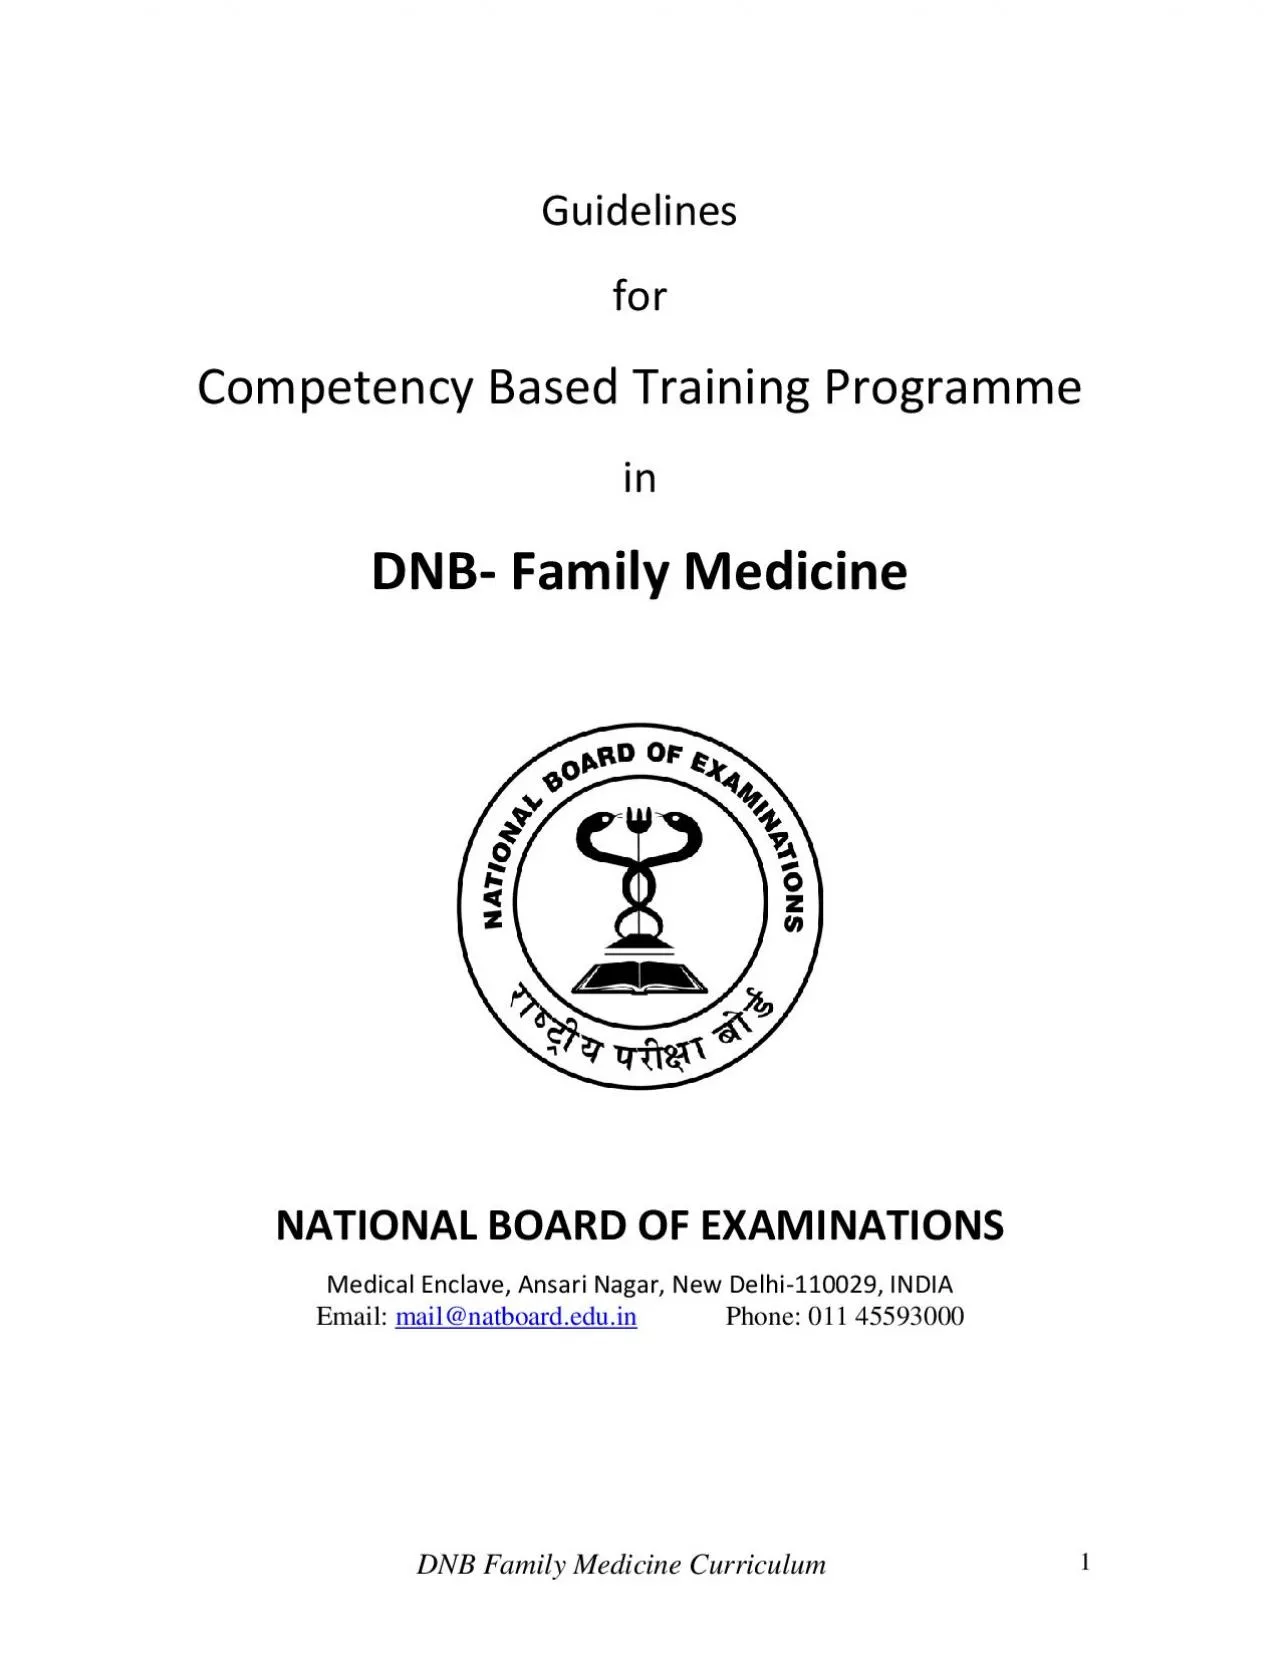 DNB Family Medicine Curricul